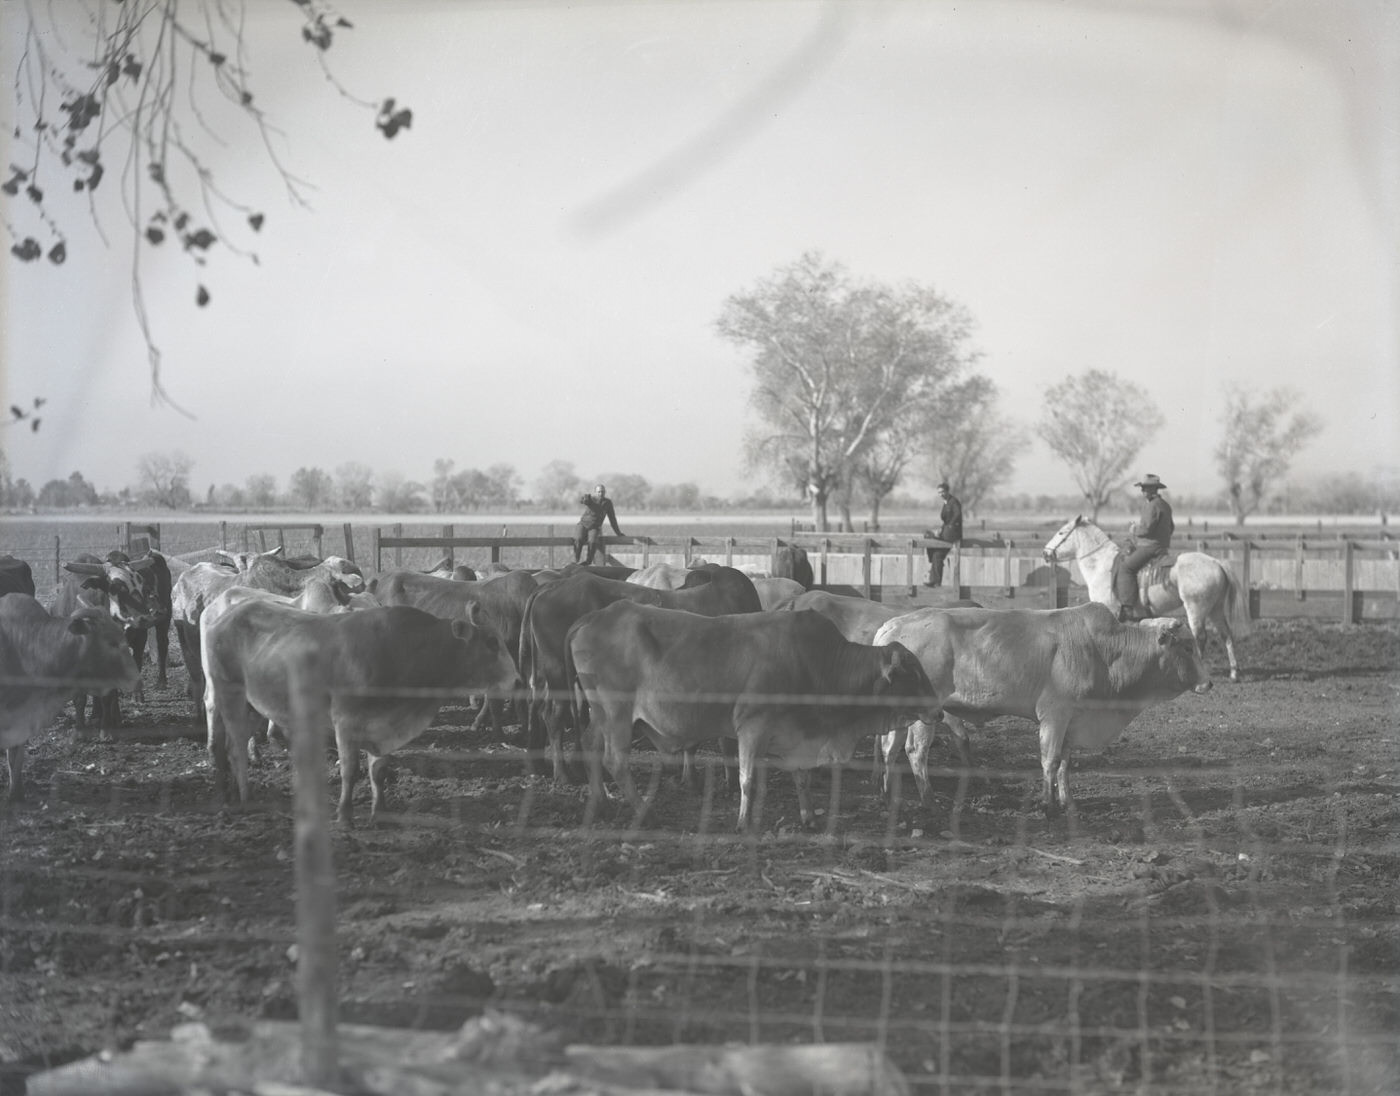 Brahma Bulls in a Corral, 1930s